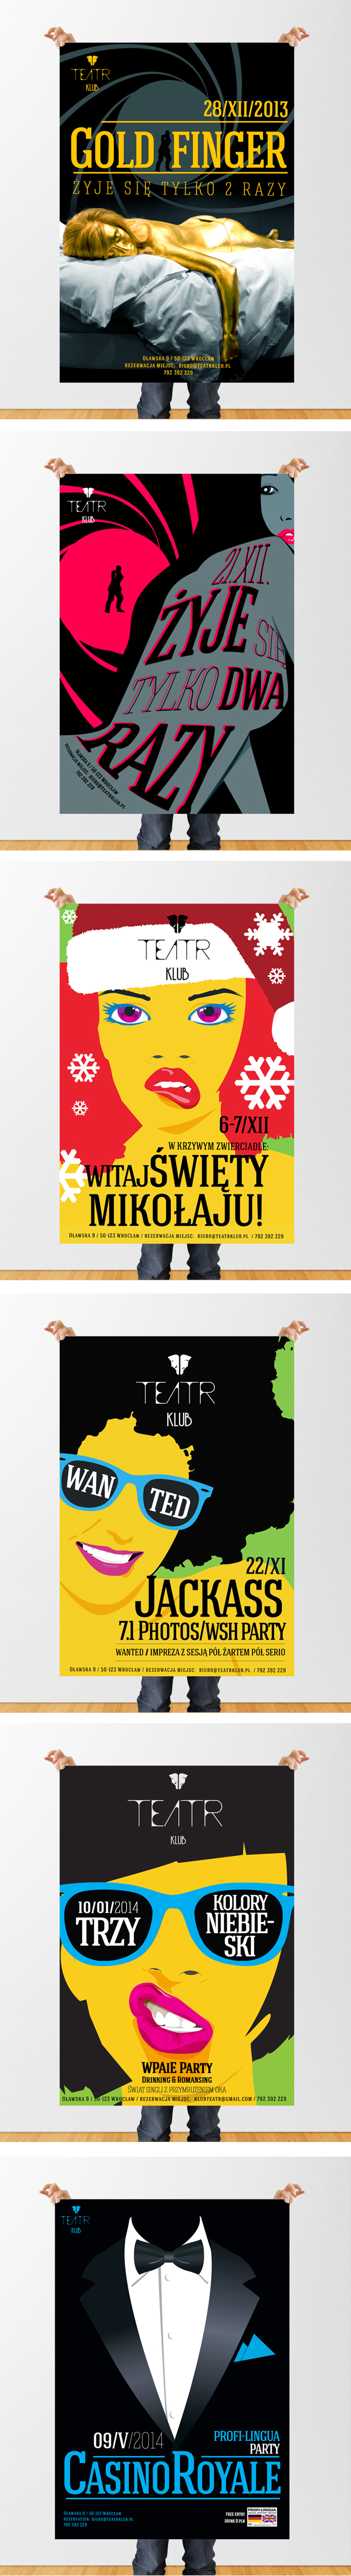 Teatr klub - events posters 2014